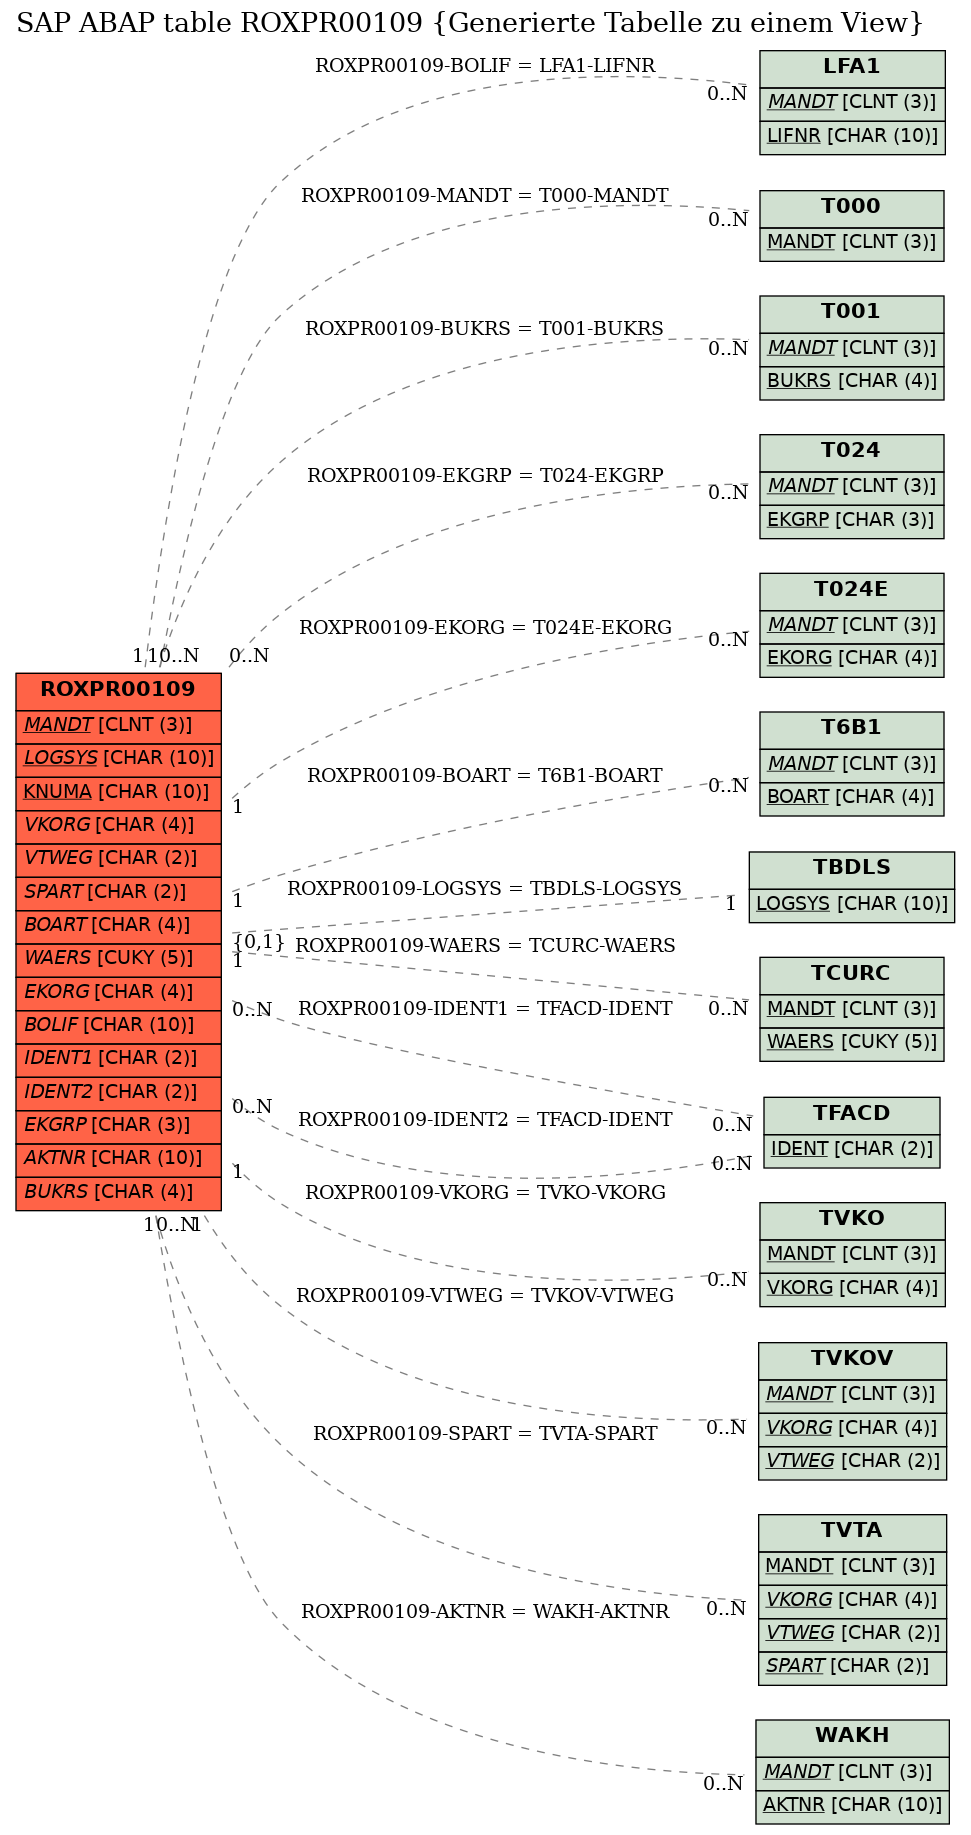 E-R Diagram for table ROXPR00109 (Generierte Tabelle zu einem View)